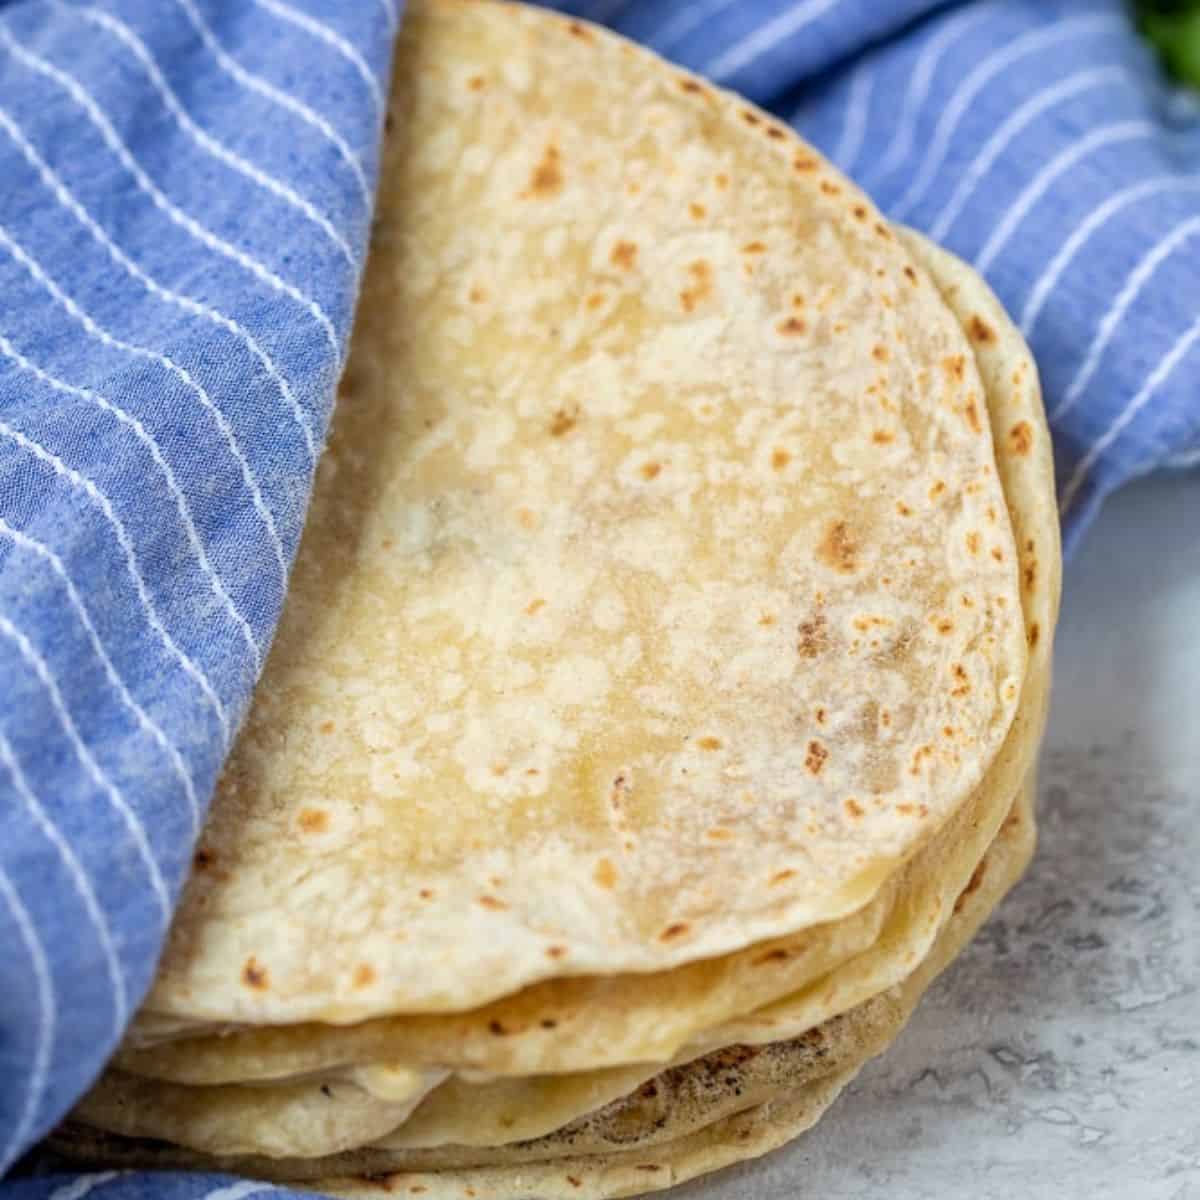 20 Ways to Use Tortillas